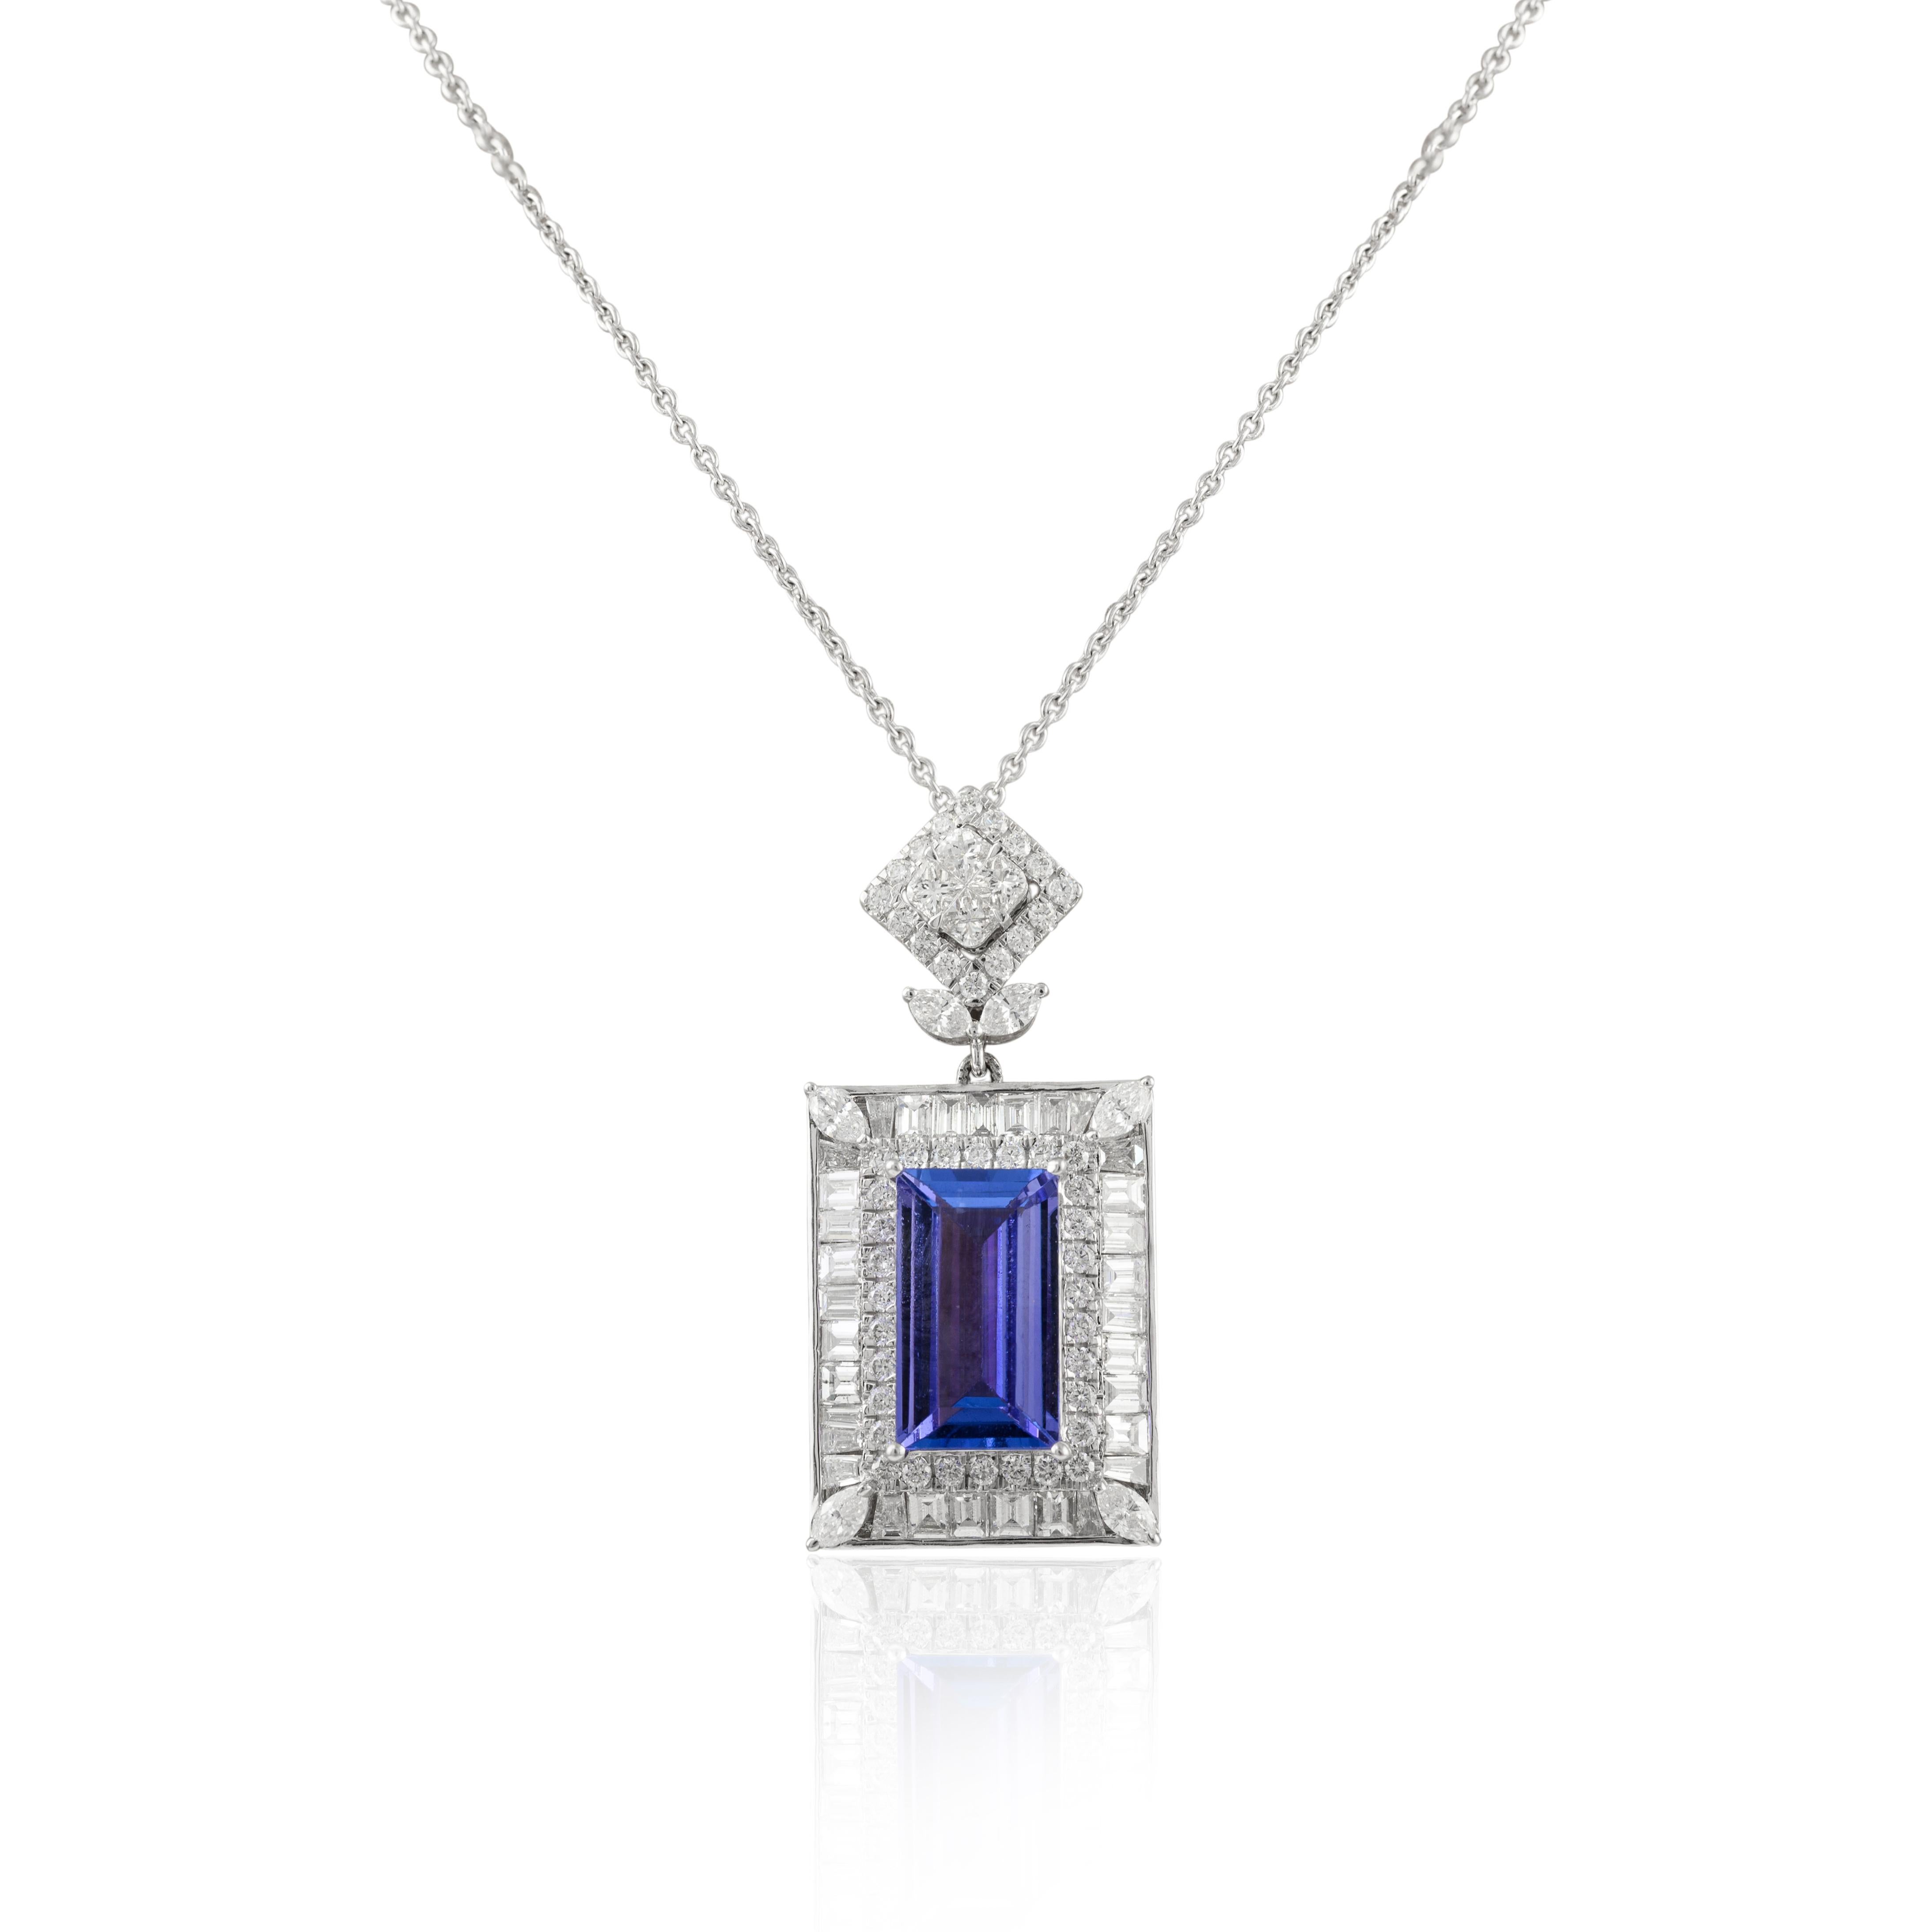  Statement Tanzanite Diamond Chain Necklace 18k White Gold, Bridesmaid Gift In New Condition For Sale In Houston, TX